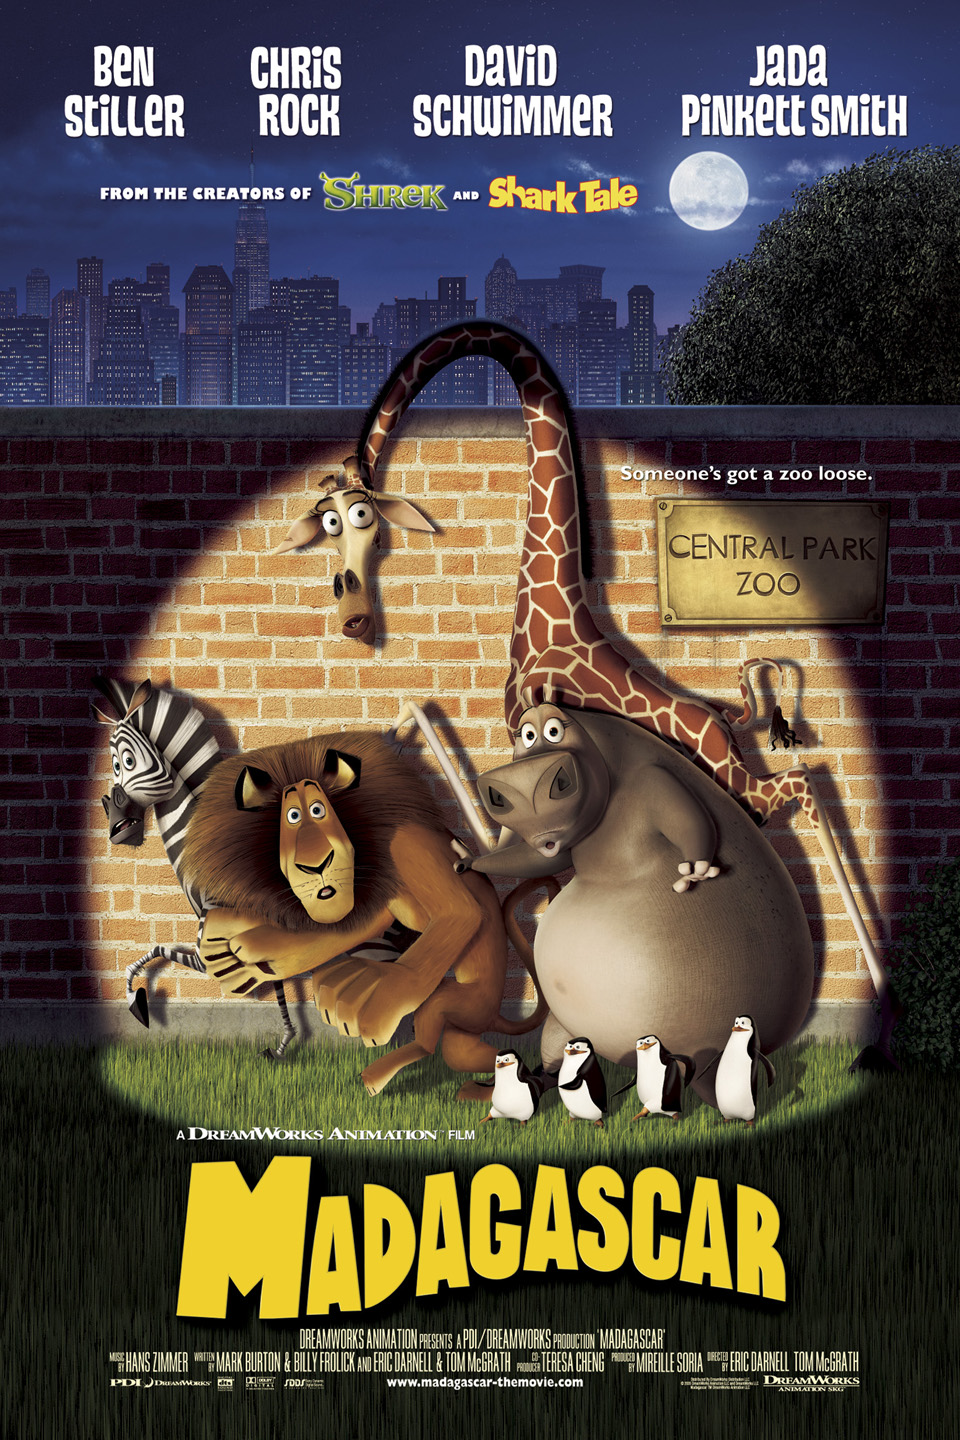 11 Film kartun Netflix untuk anak, ada Kung Fu Panda hingga Mowgli